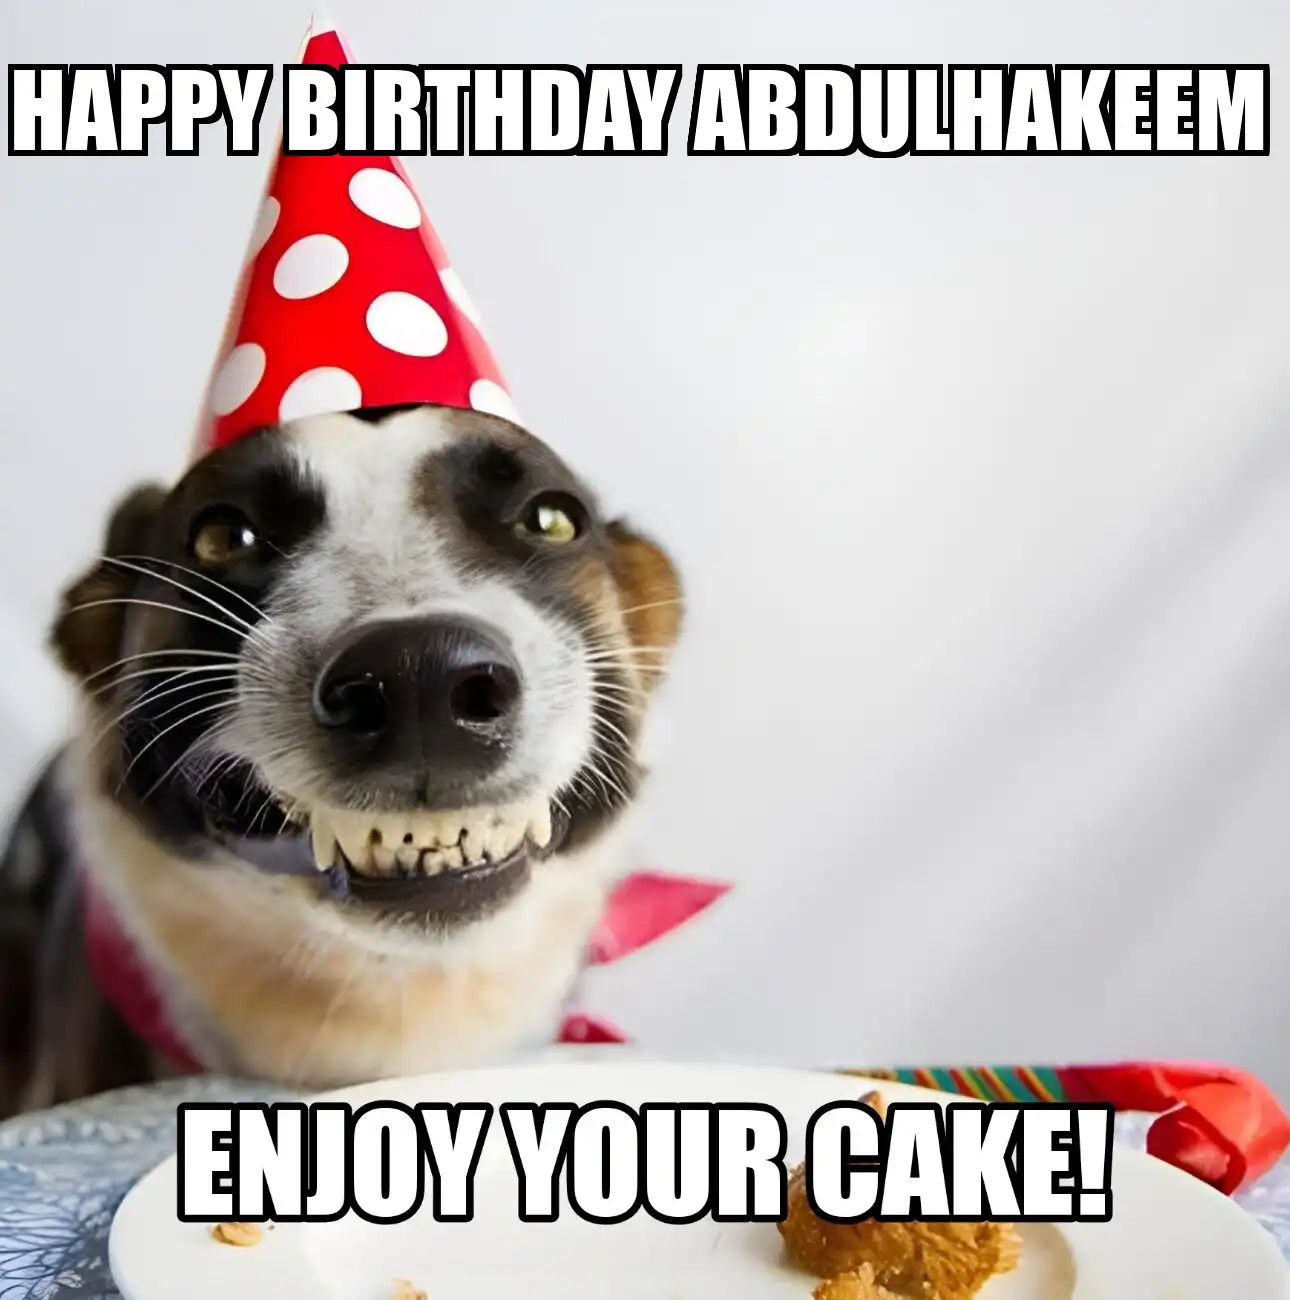 Happy Birthday Abdulhakeem Enjoy Your Cake Dog Meme